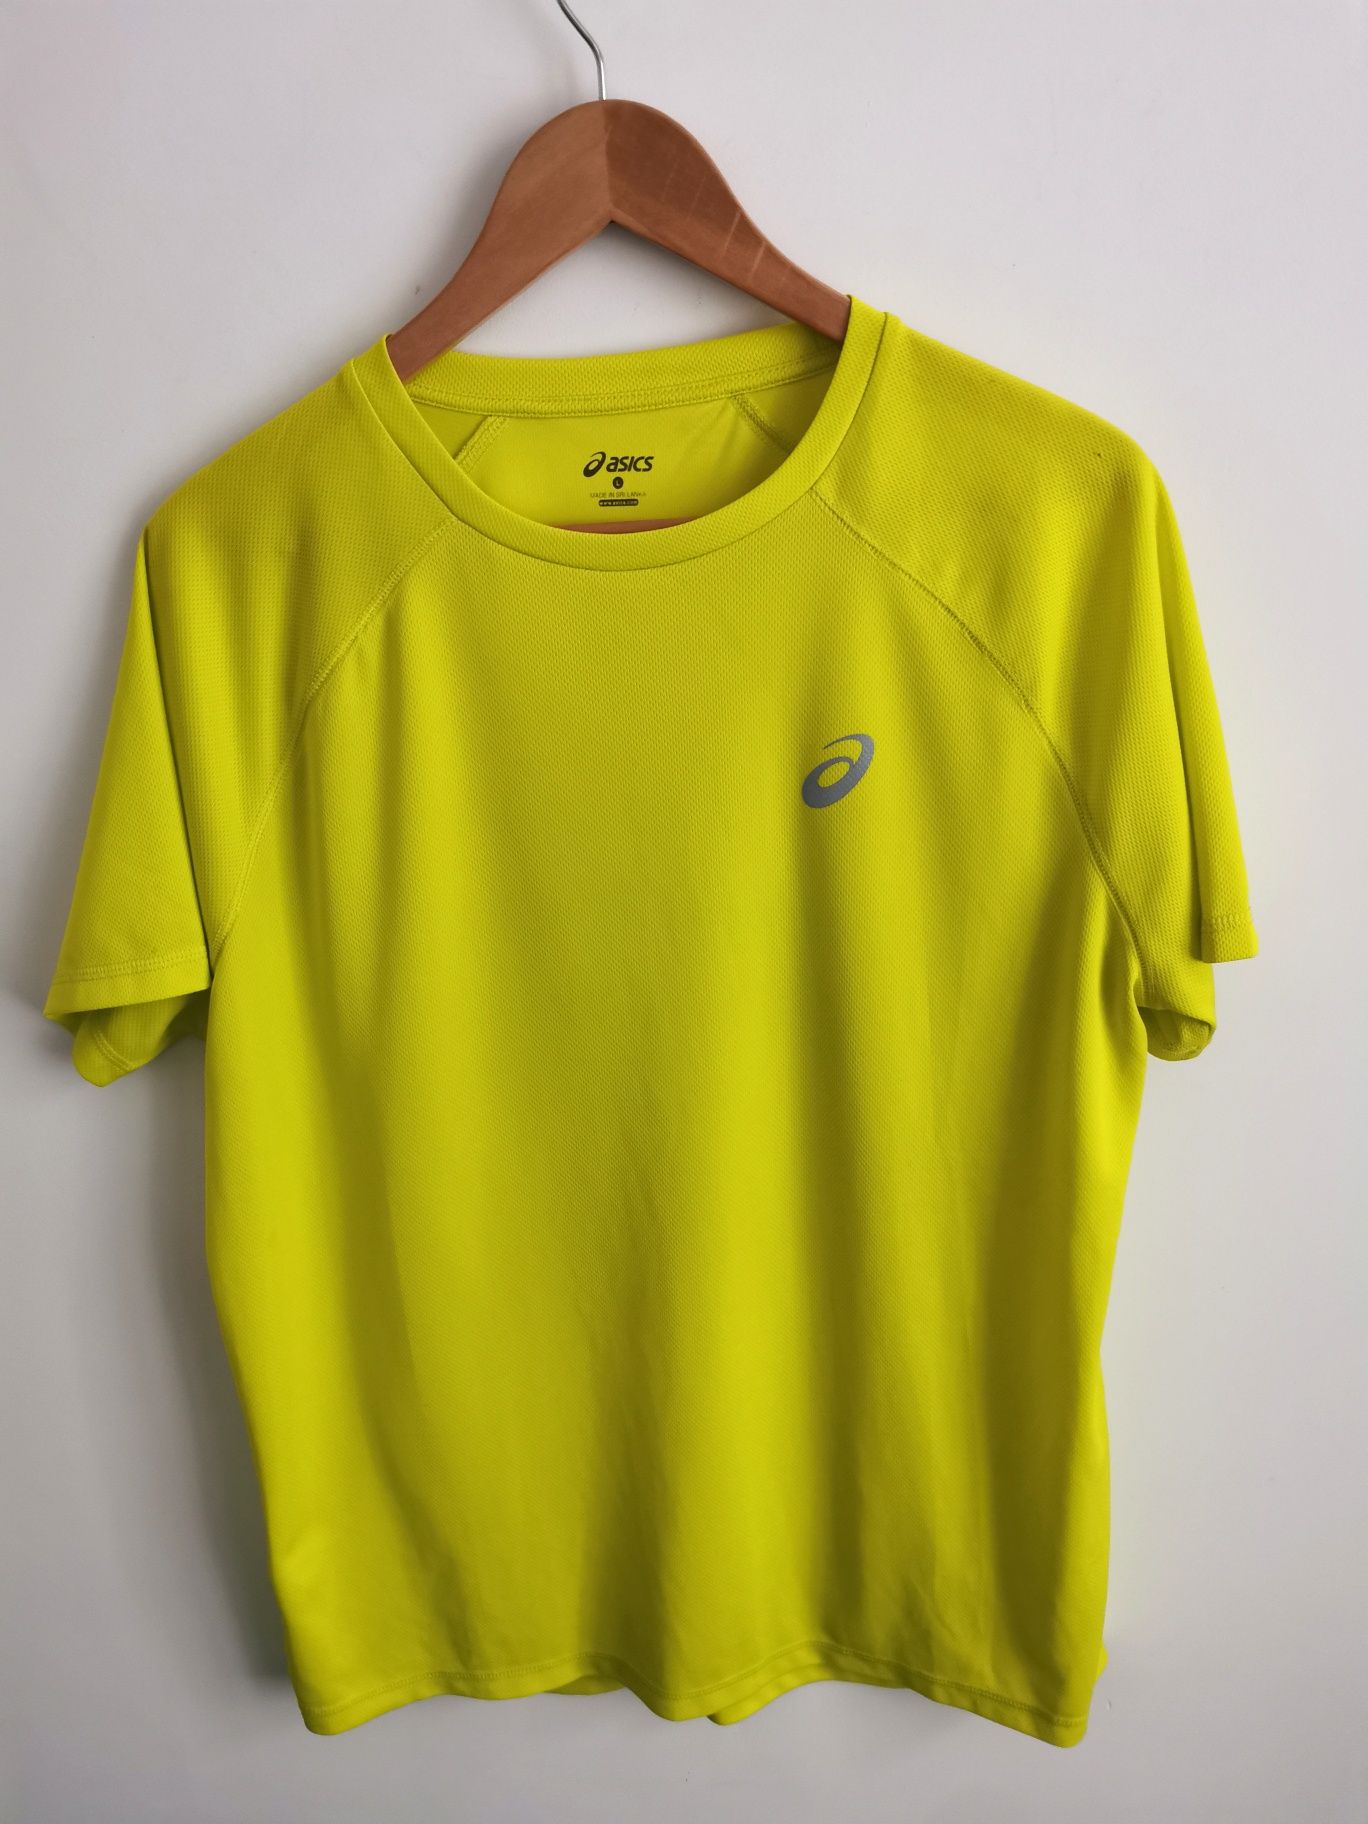 Asics koszulka krótki rękaw sportowa logowana męska t-shirt L